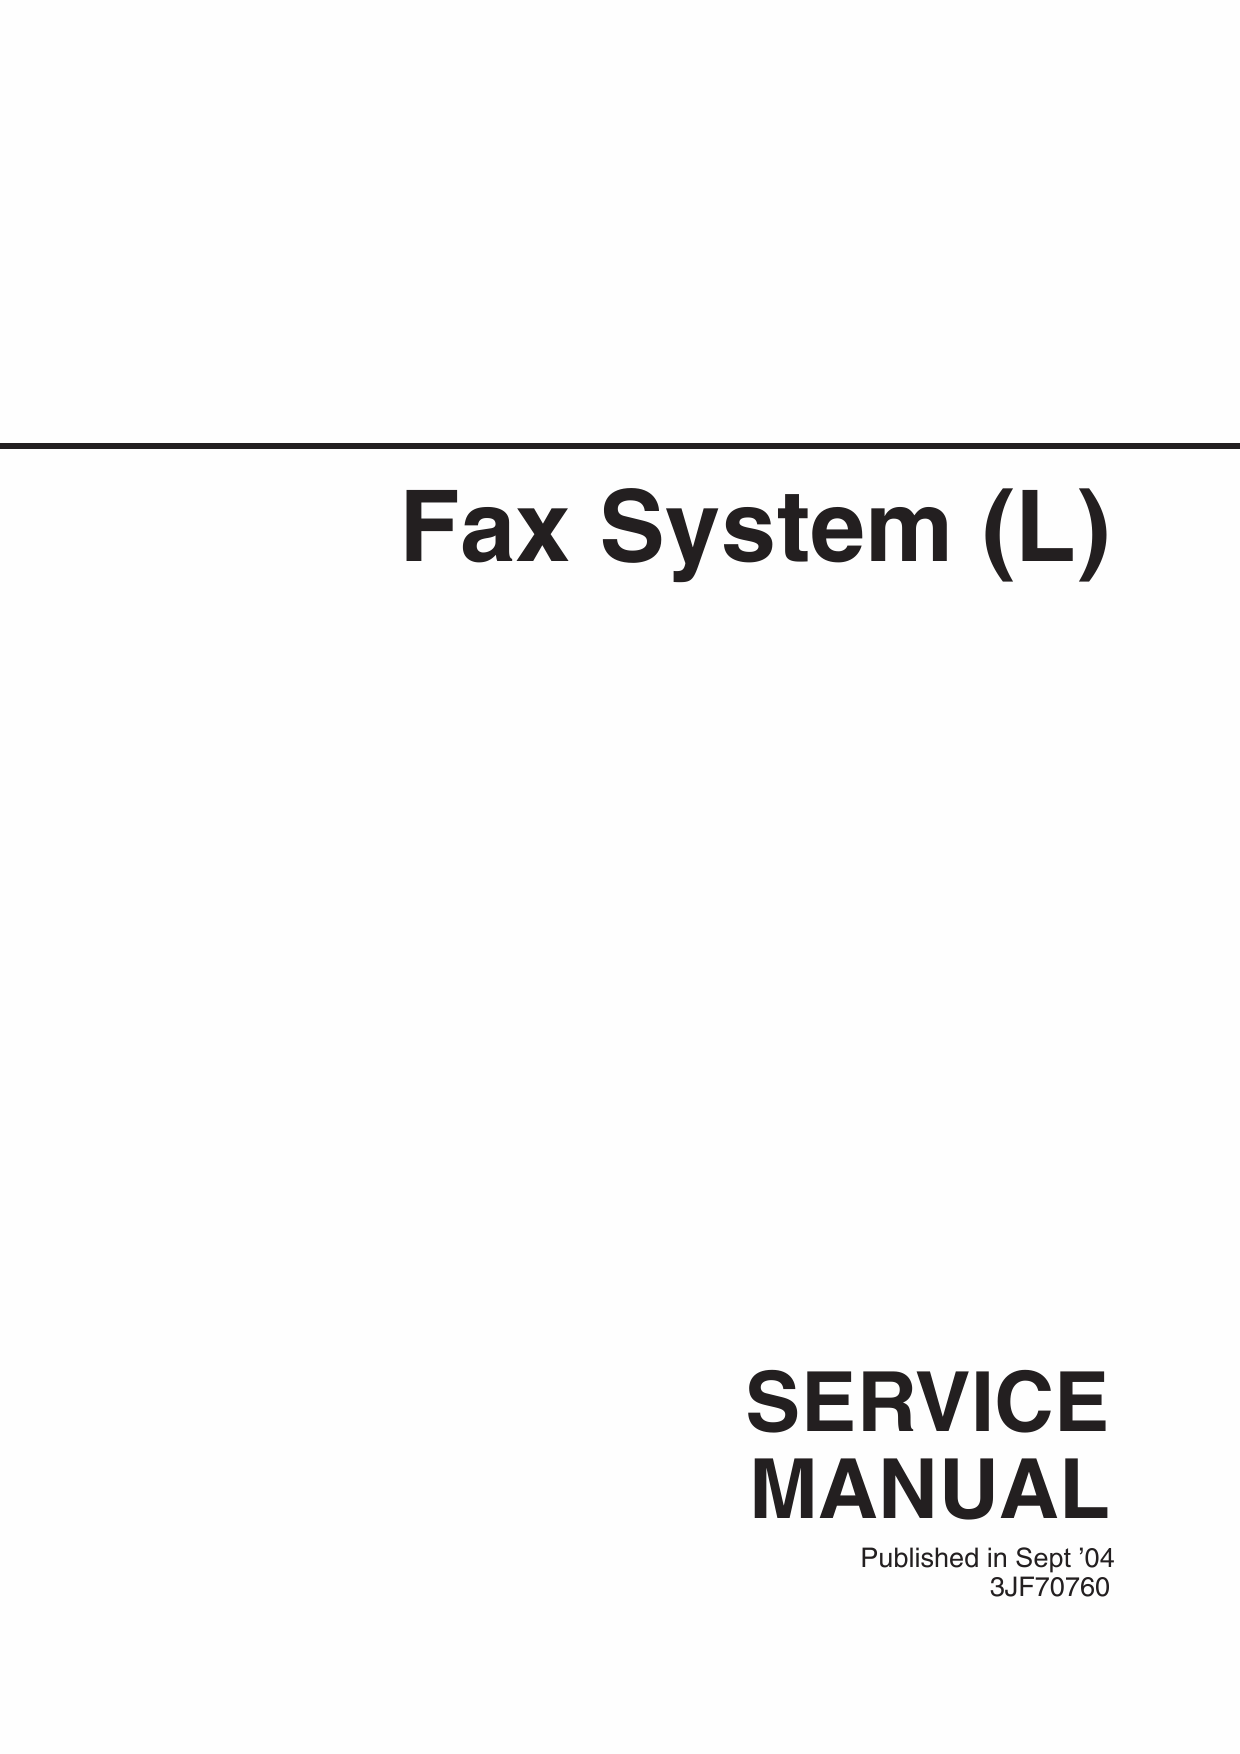 KYOCERA Options FAX-System-L Parts Manual-1